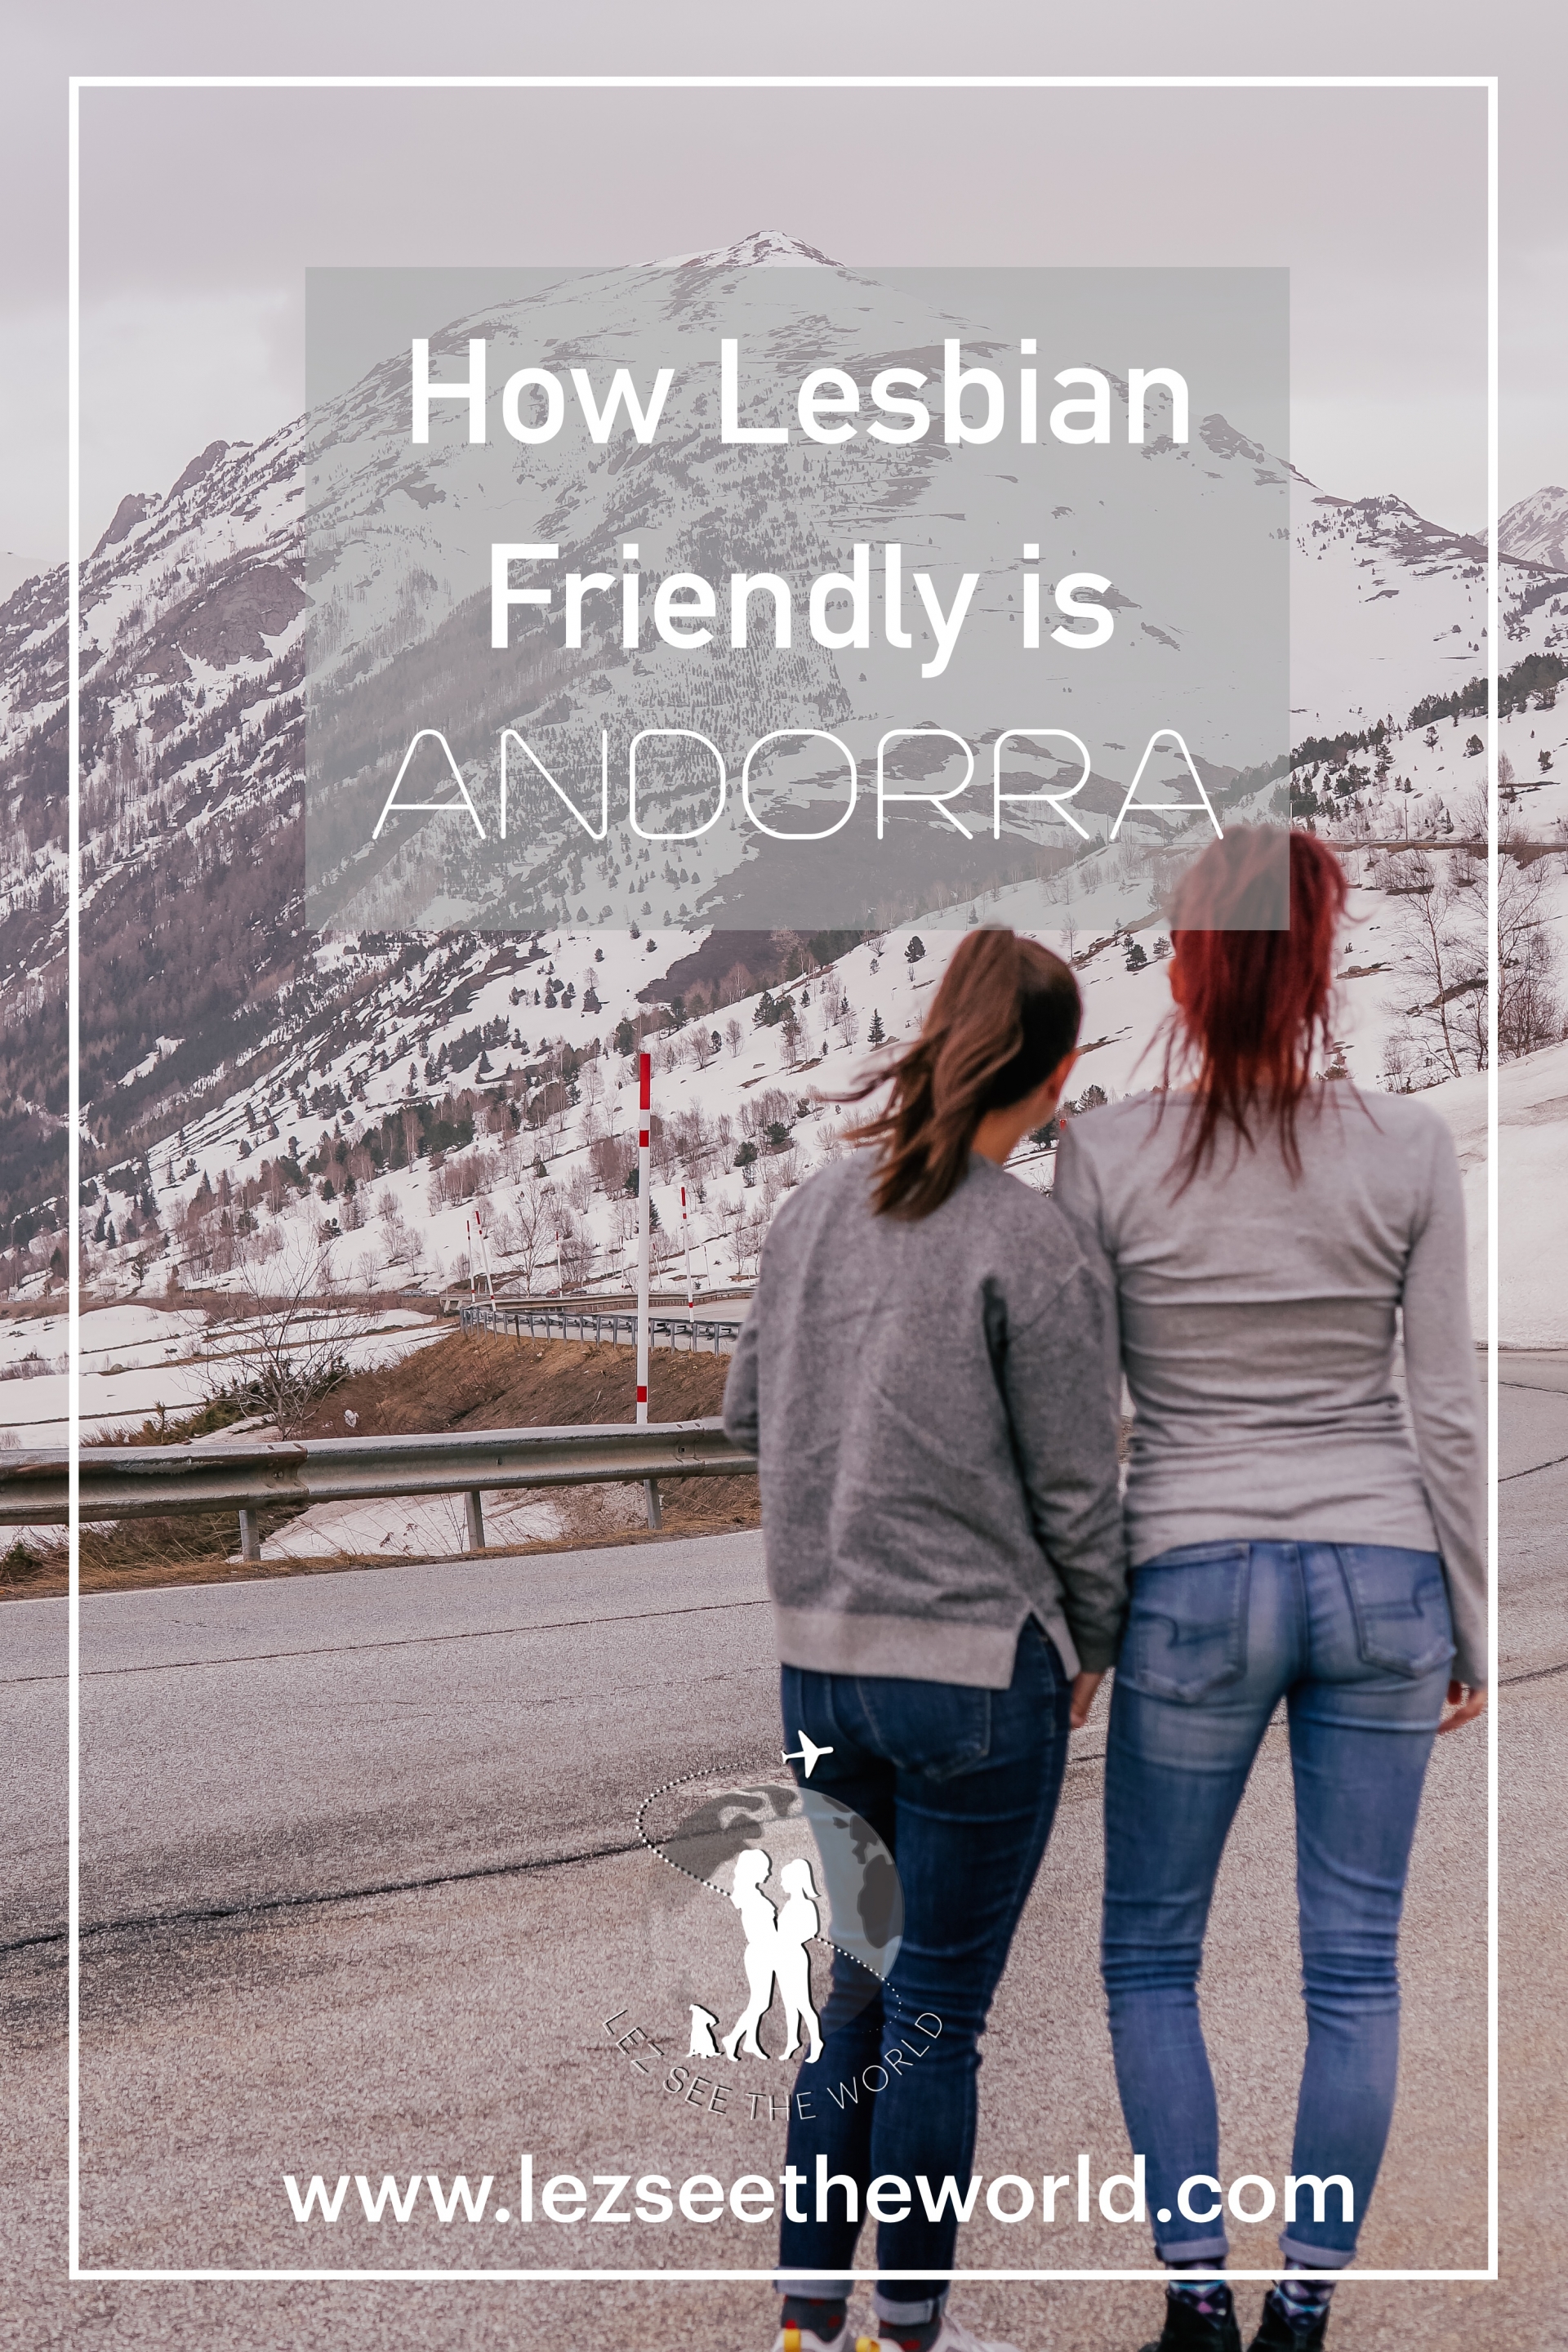 How Lesbian Friendly is Andorra